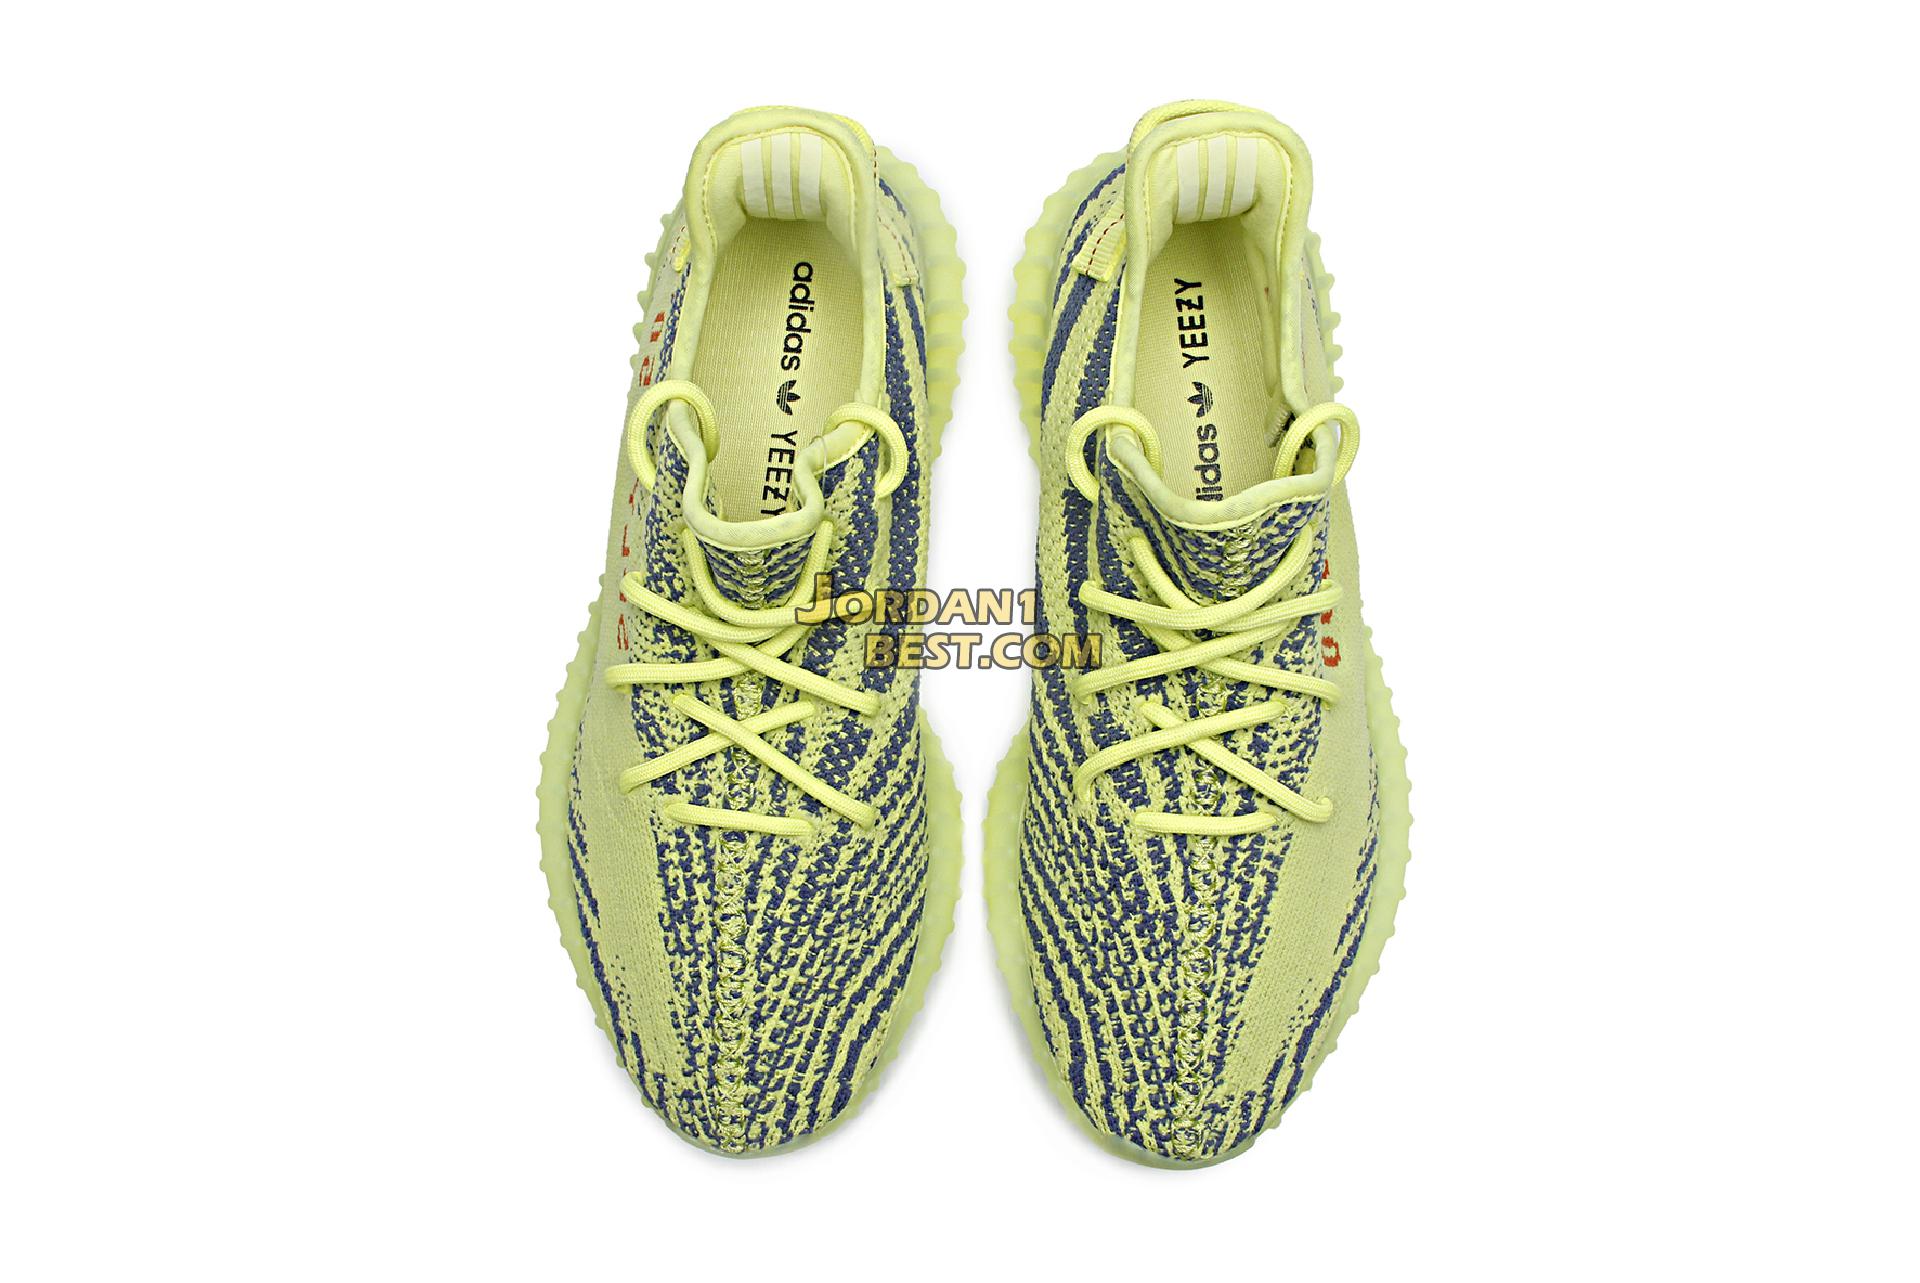 Adidas Yeezy Boost 350 V2 "Semi Frozen Yellow" B37572